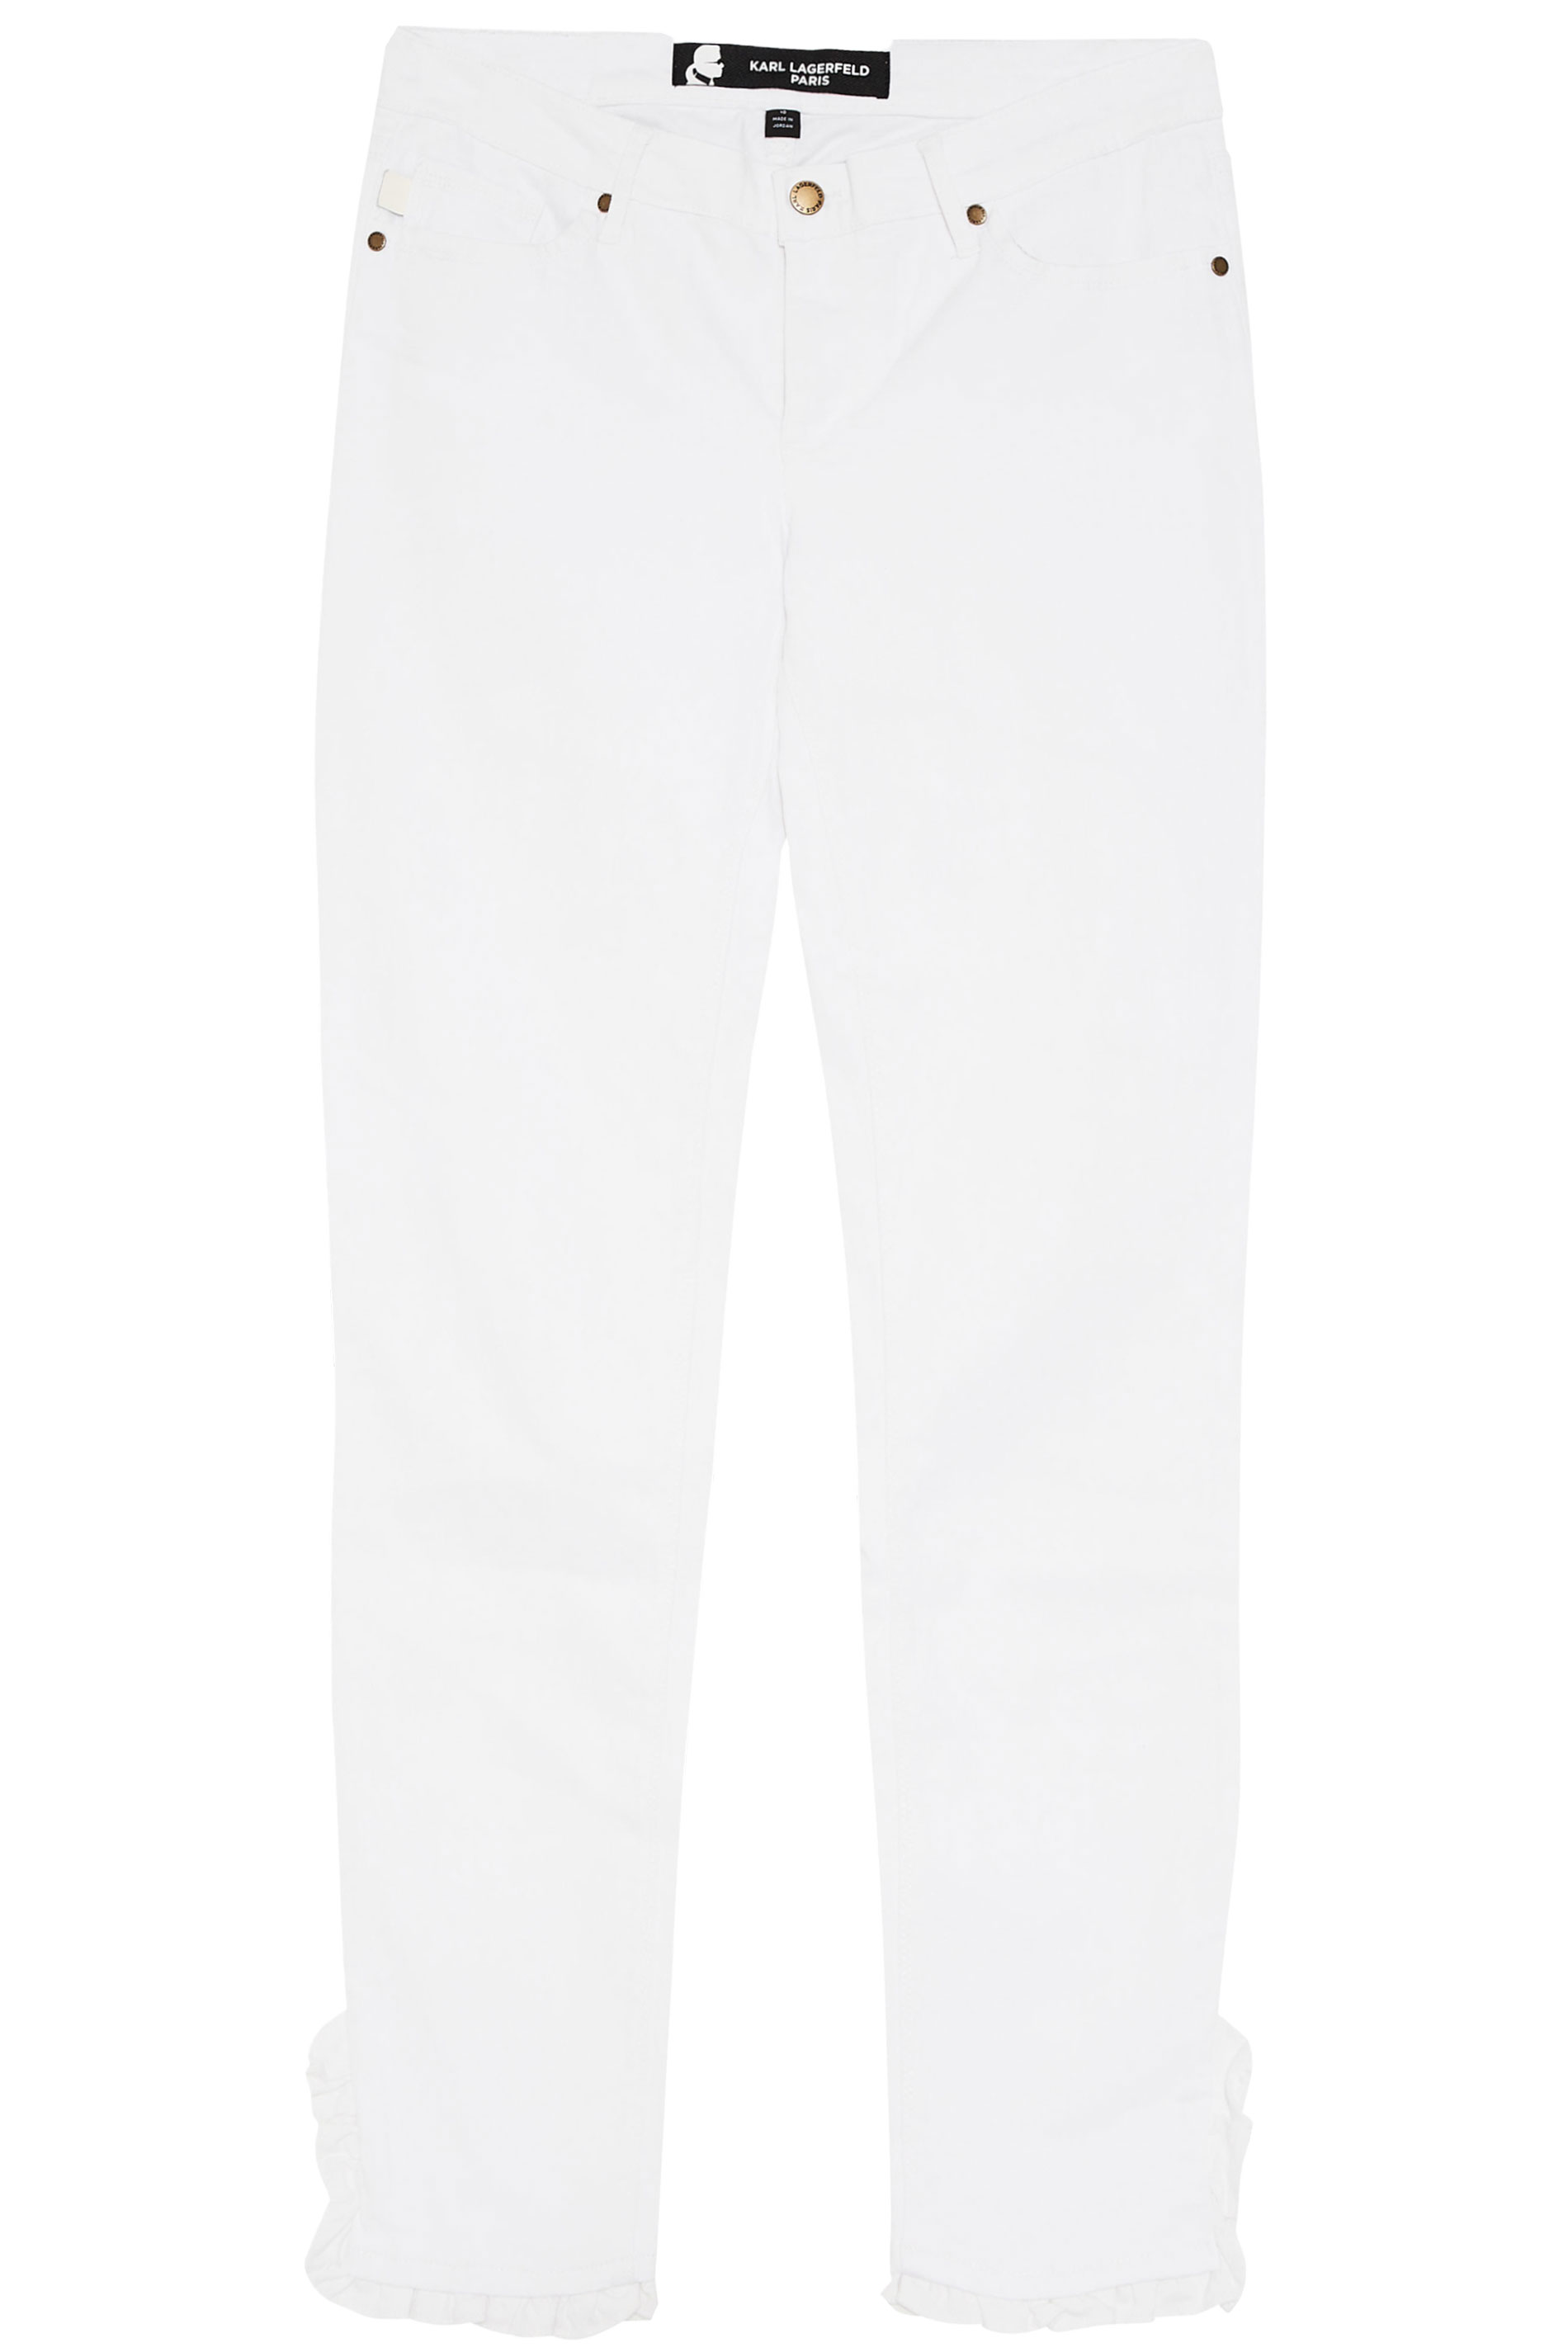 KARL LAGERFELD PARIS White Frill Hem Jeans | Long Tall Sally